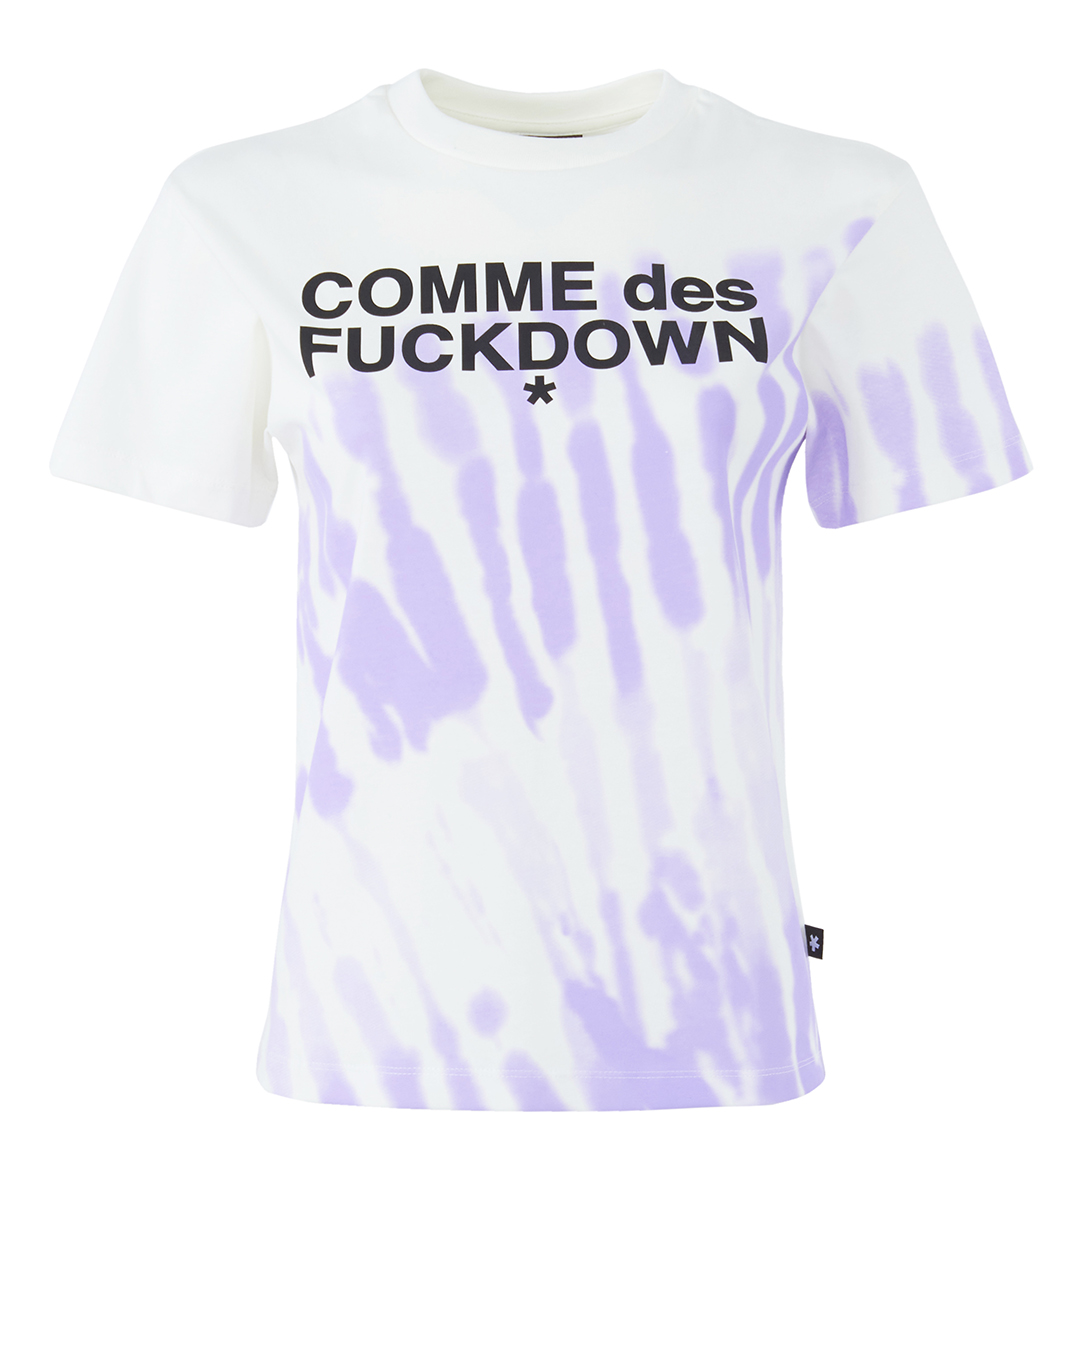 хлопковая футболка COMME des FUCKDOWN хлопковая футболка dsquared2